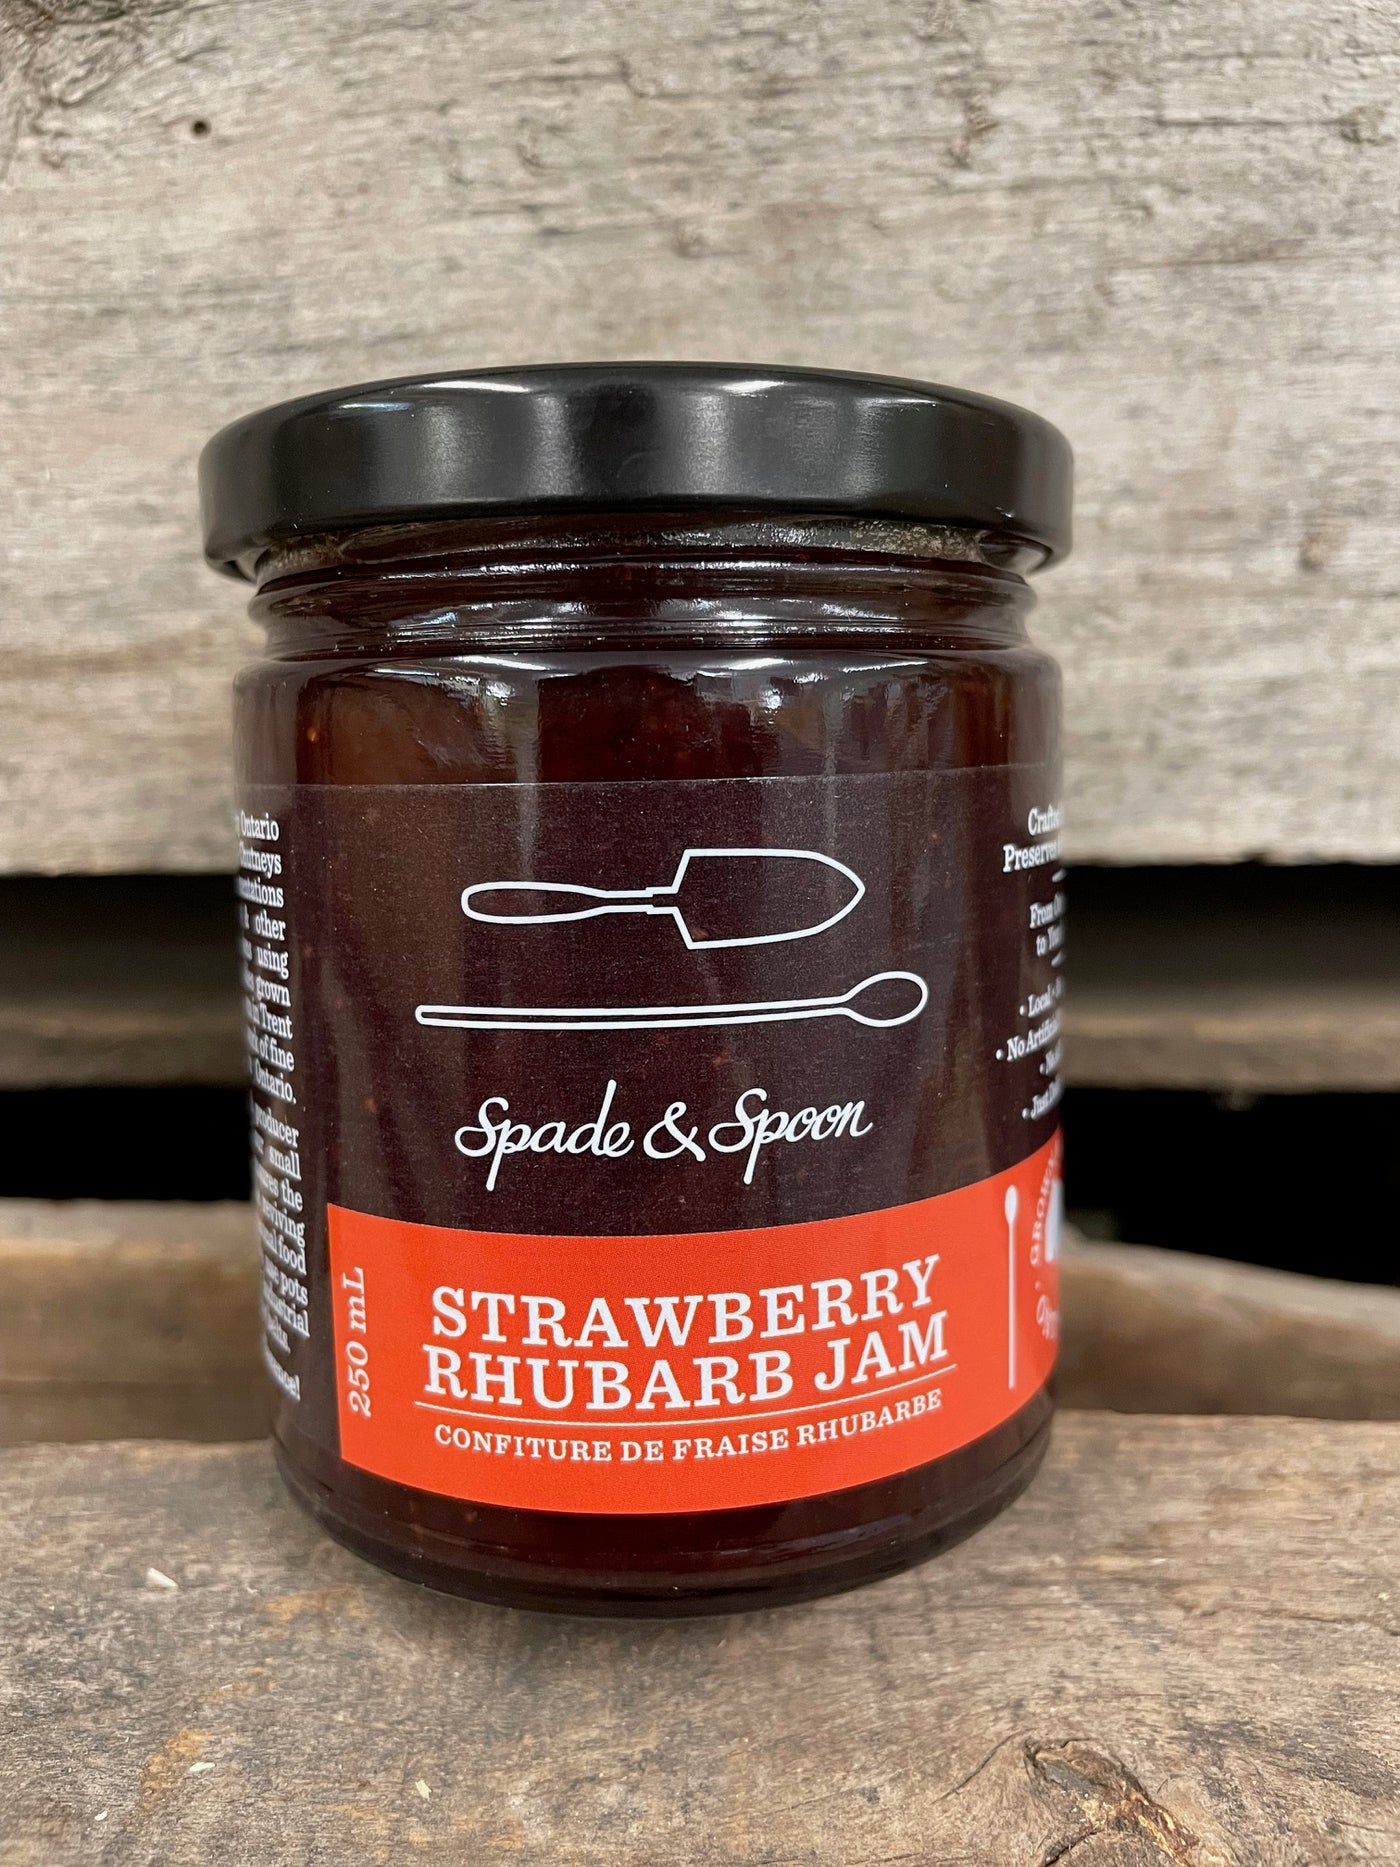 Spade & Spoon - Strawberry Rhubarb Jam